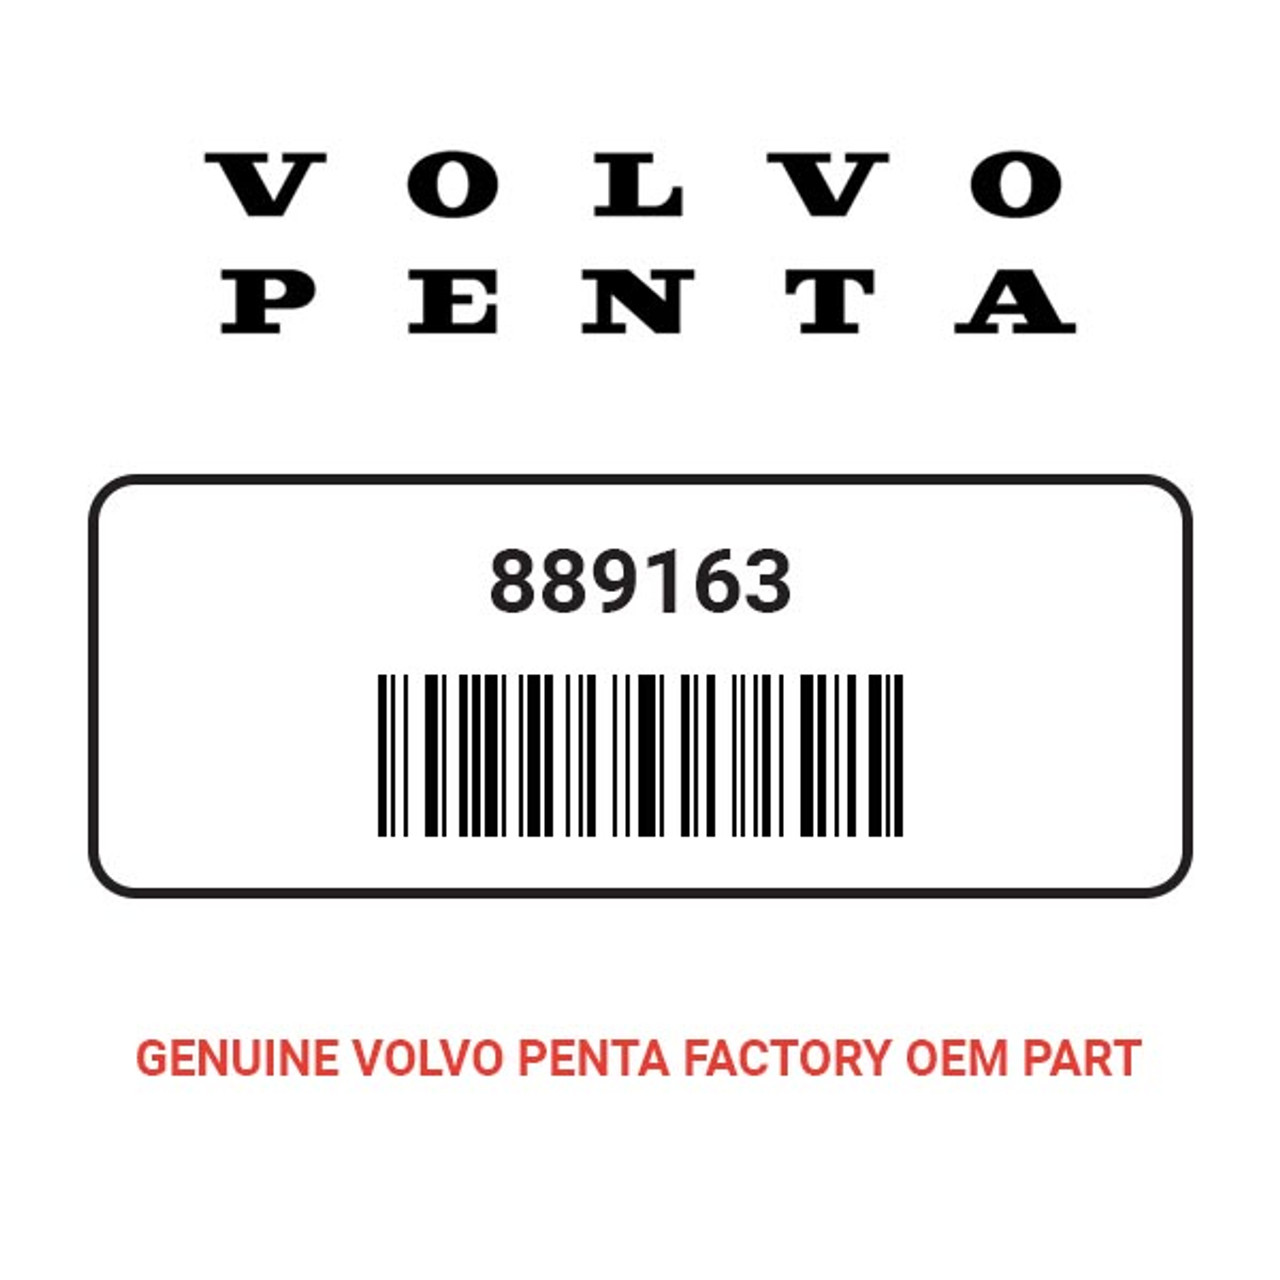 Volvo Penta 889163 Hose Wholesale Marine